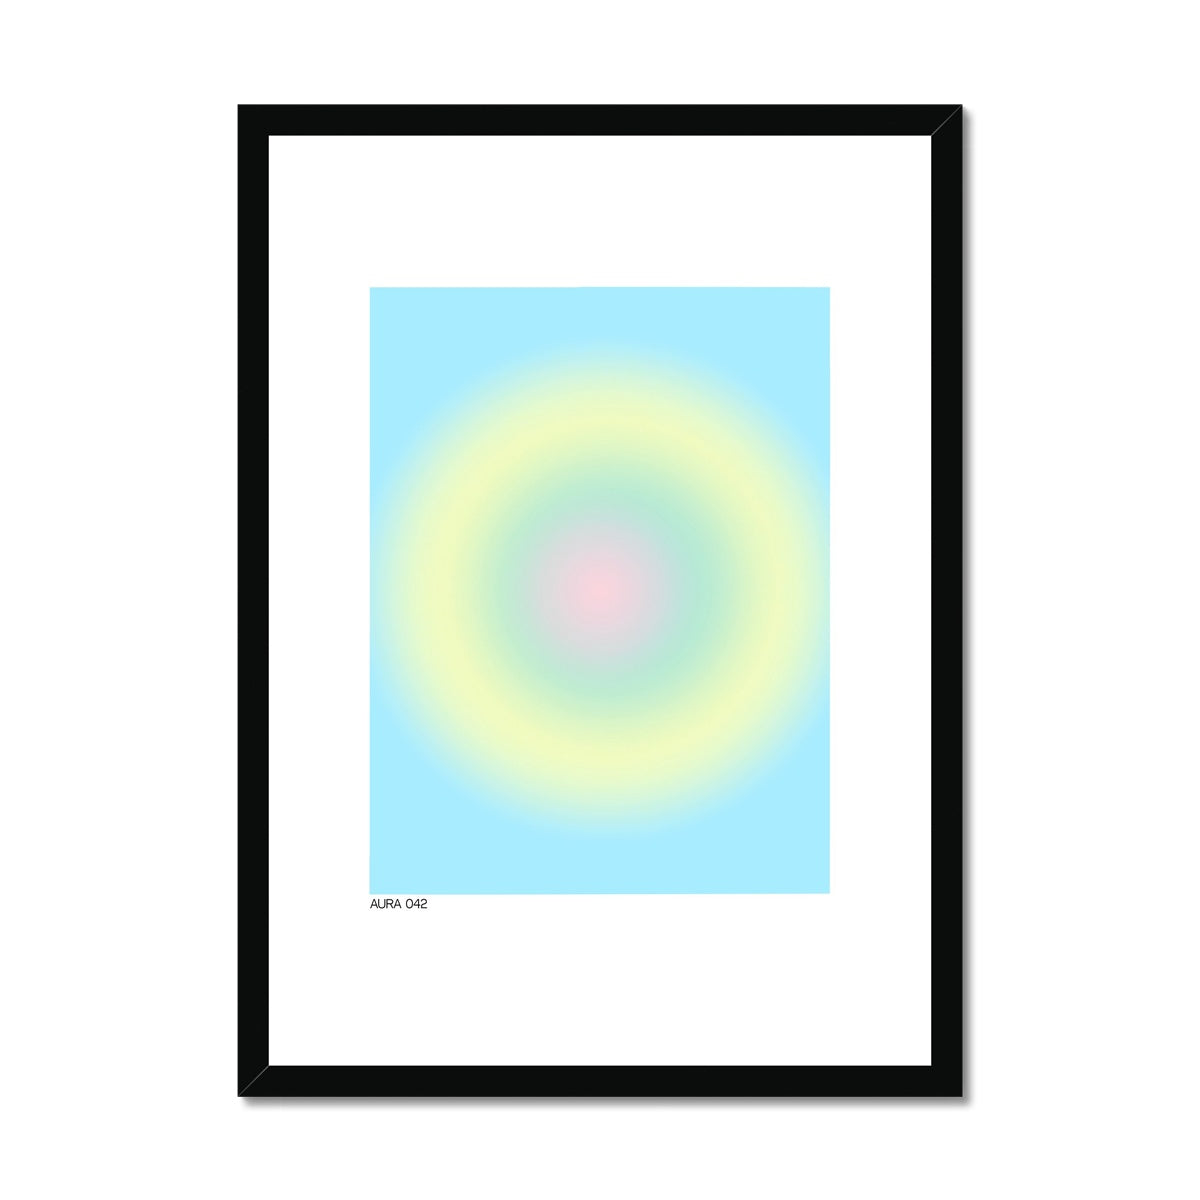 aura 042 Framed & Mounted Print